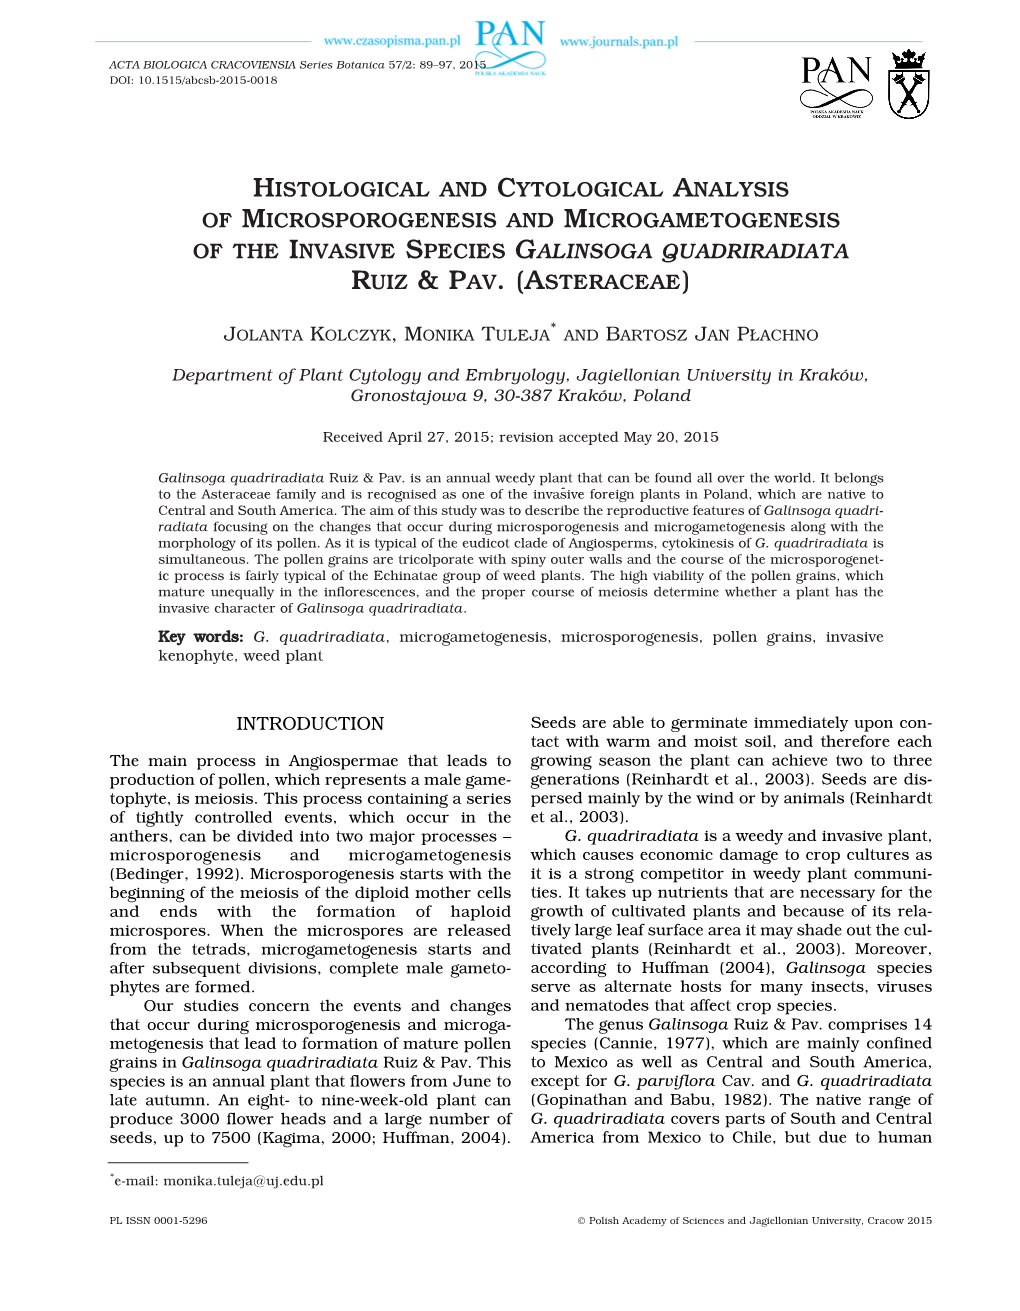 Histological and Cytological Analysis of Microsporogenesis and Microgametogenesis of the Invasive Species Galinsoga Quadriradiata Ruiz & Pav